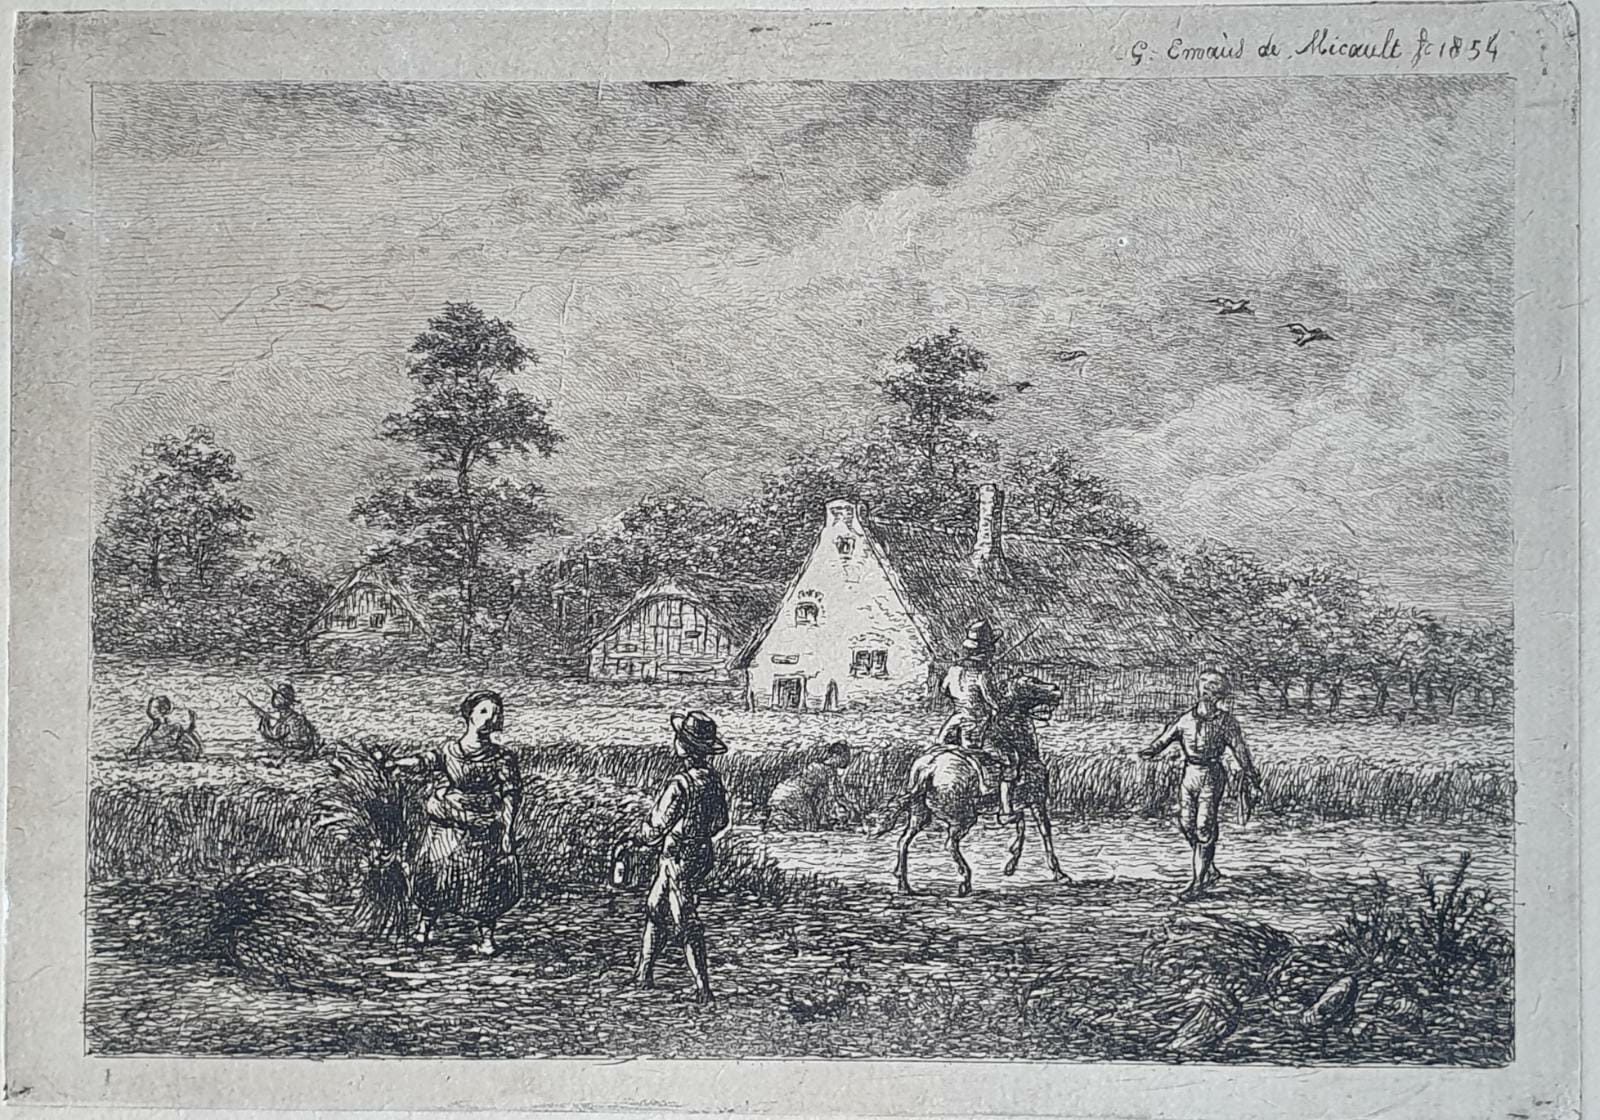 [Original etching, ets] G.E. de Micault. The harvest at the village of Houten, published 1854.